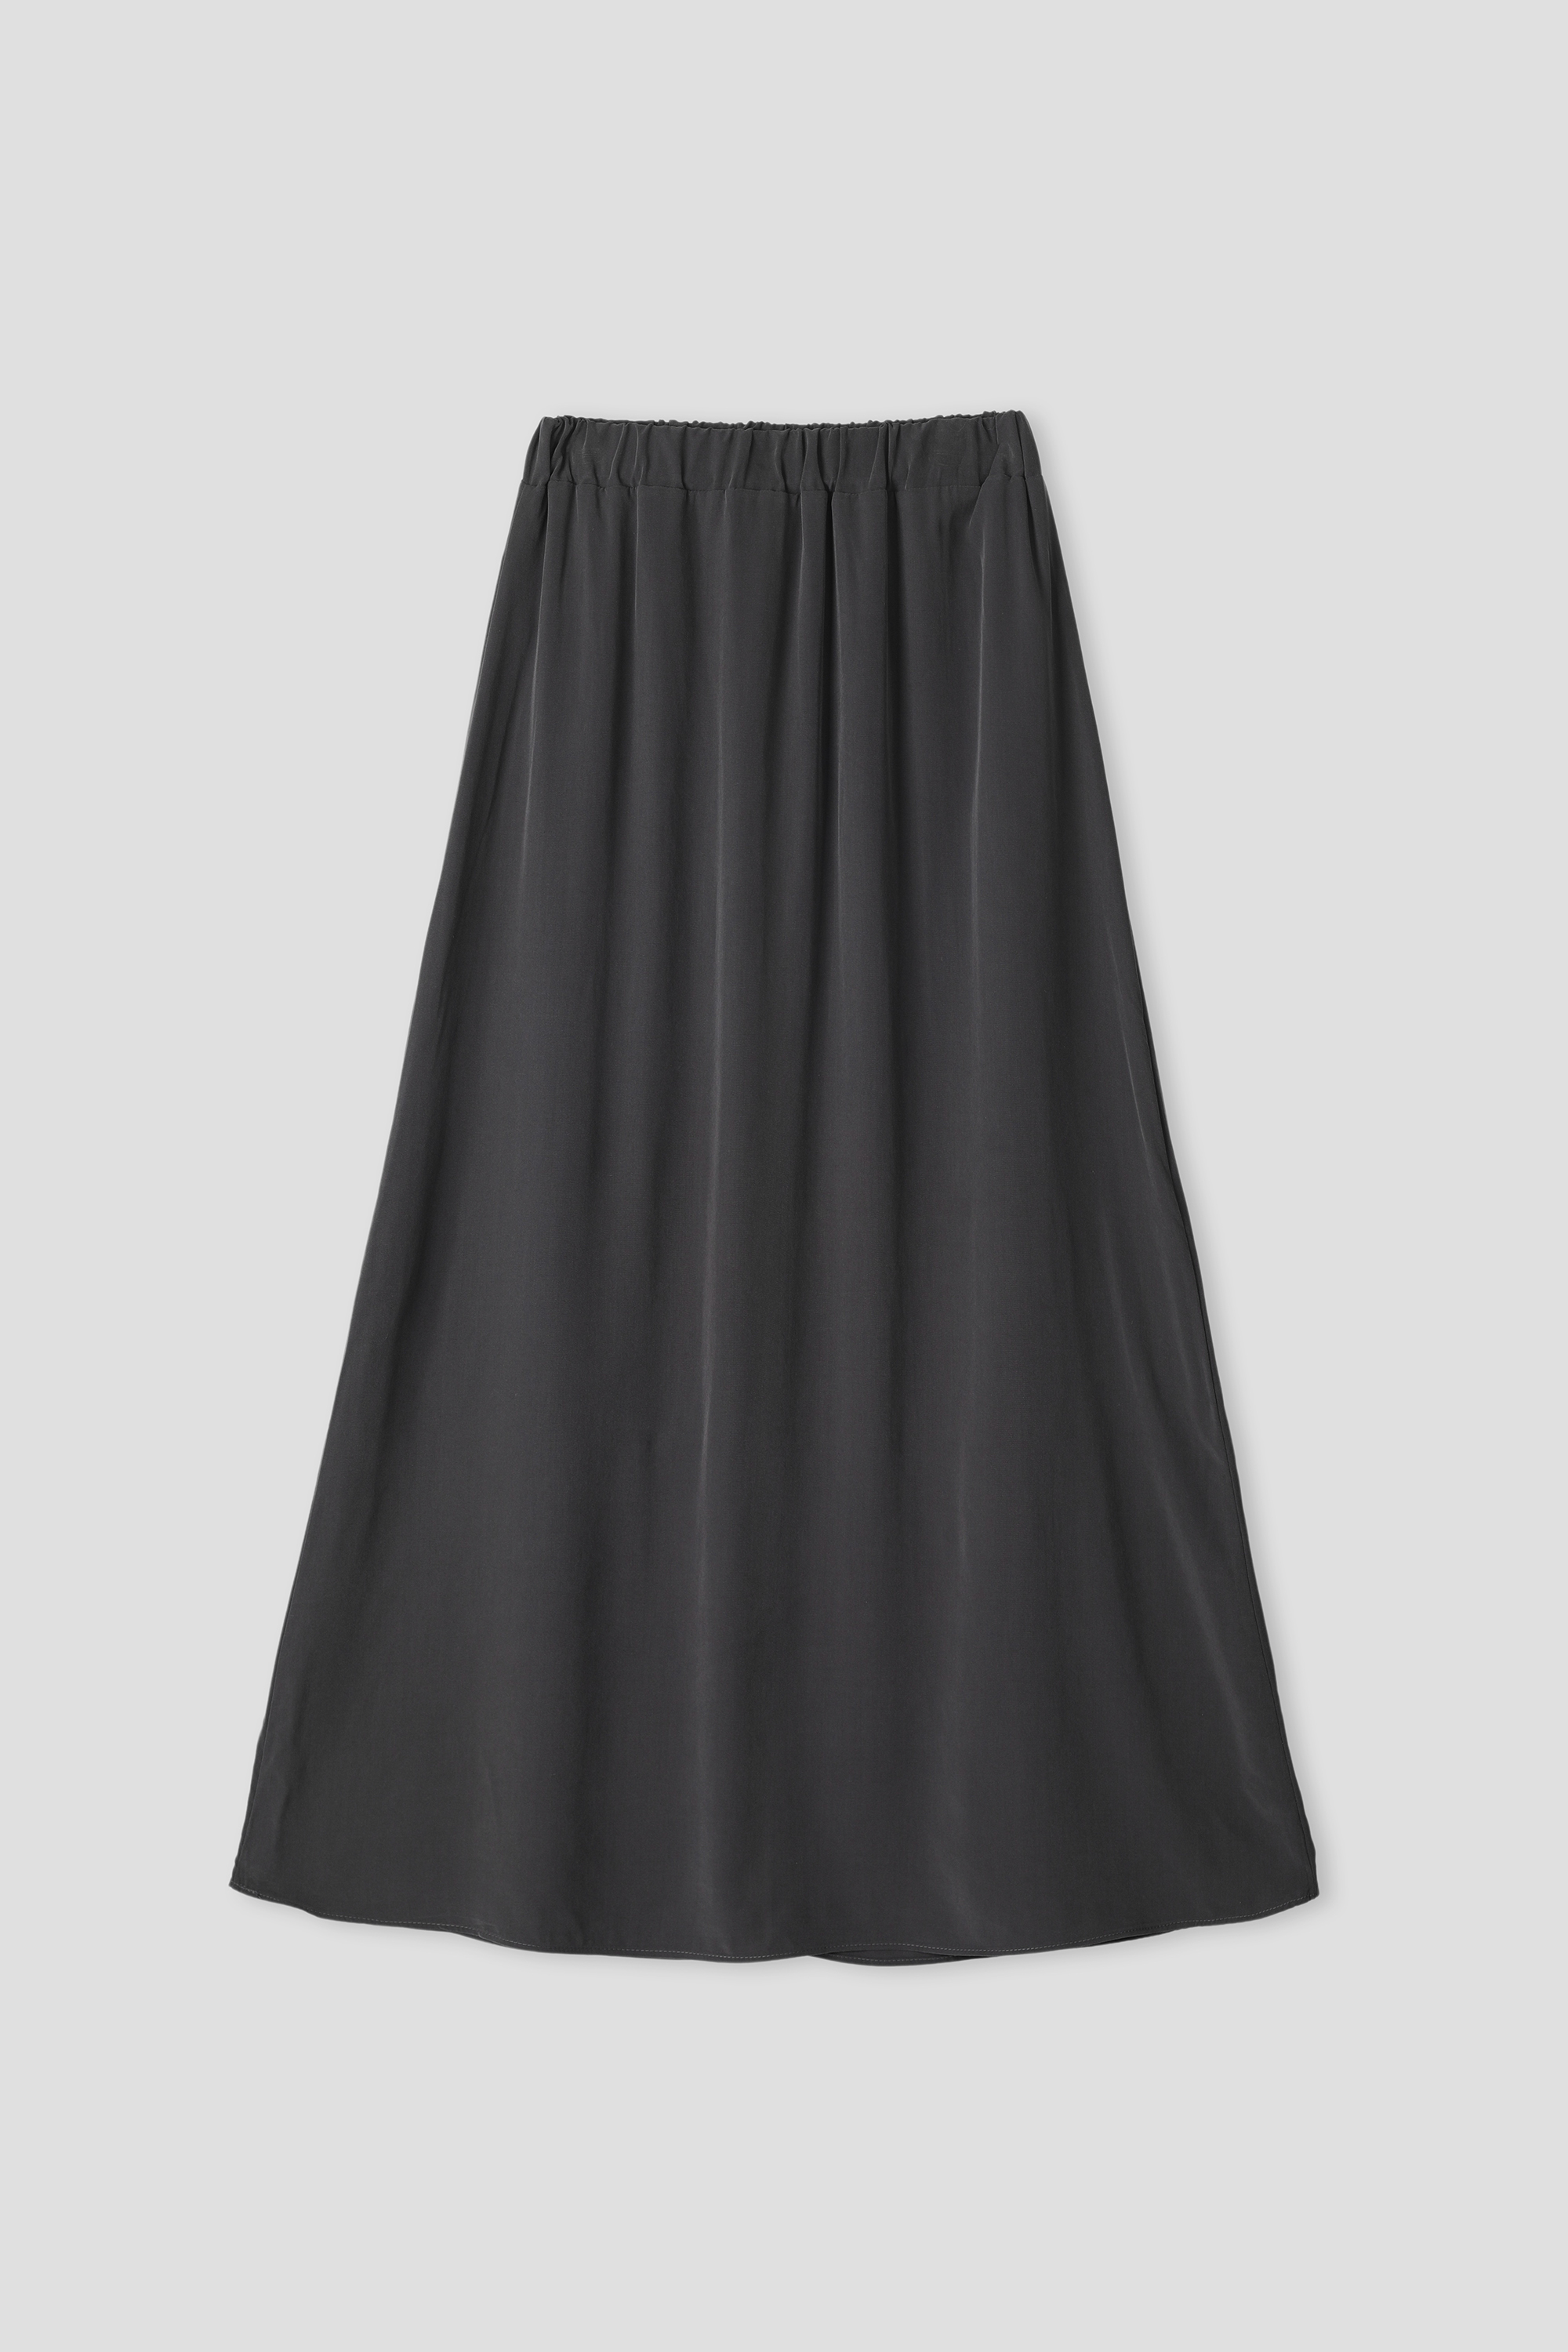 [ITV] Moon modal skirt [3colors]